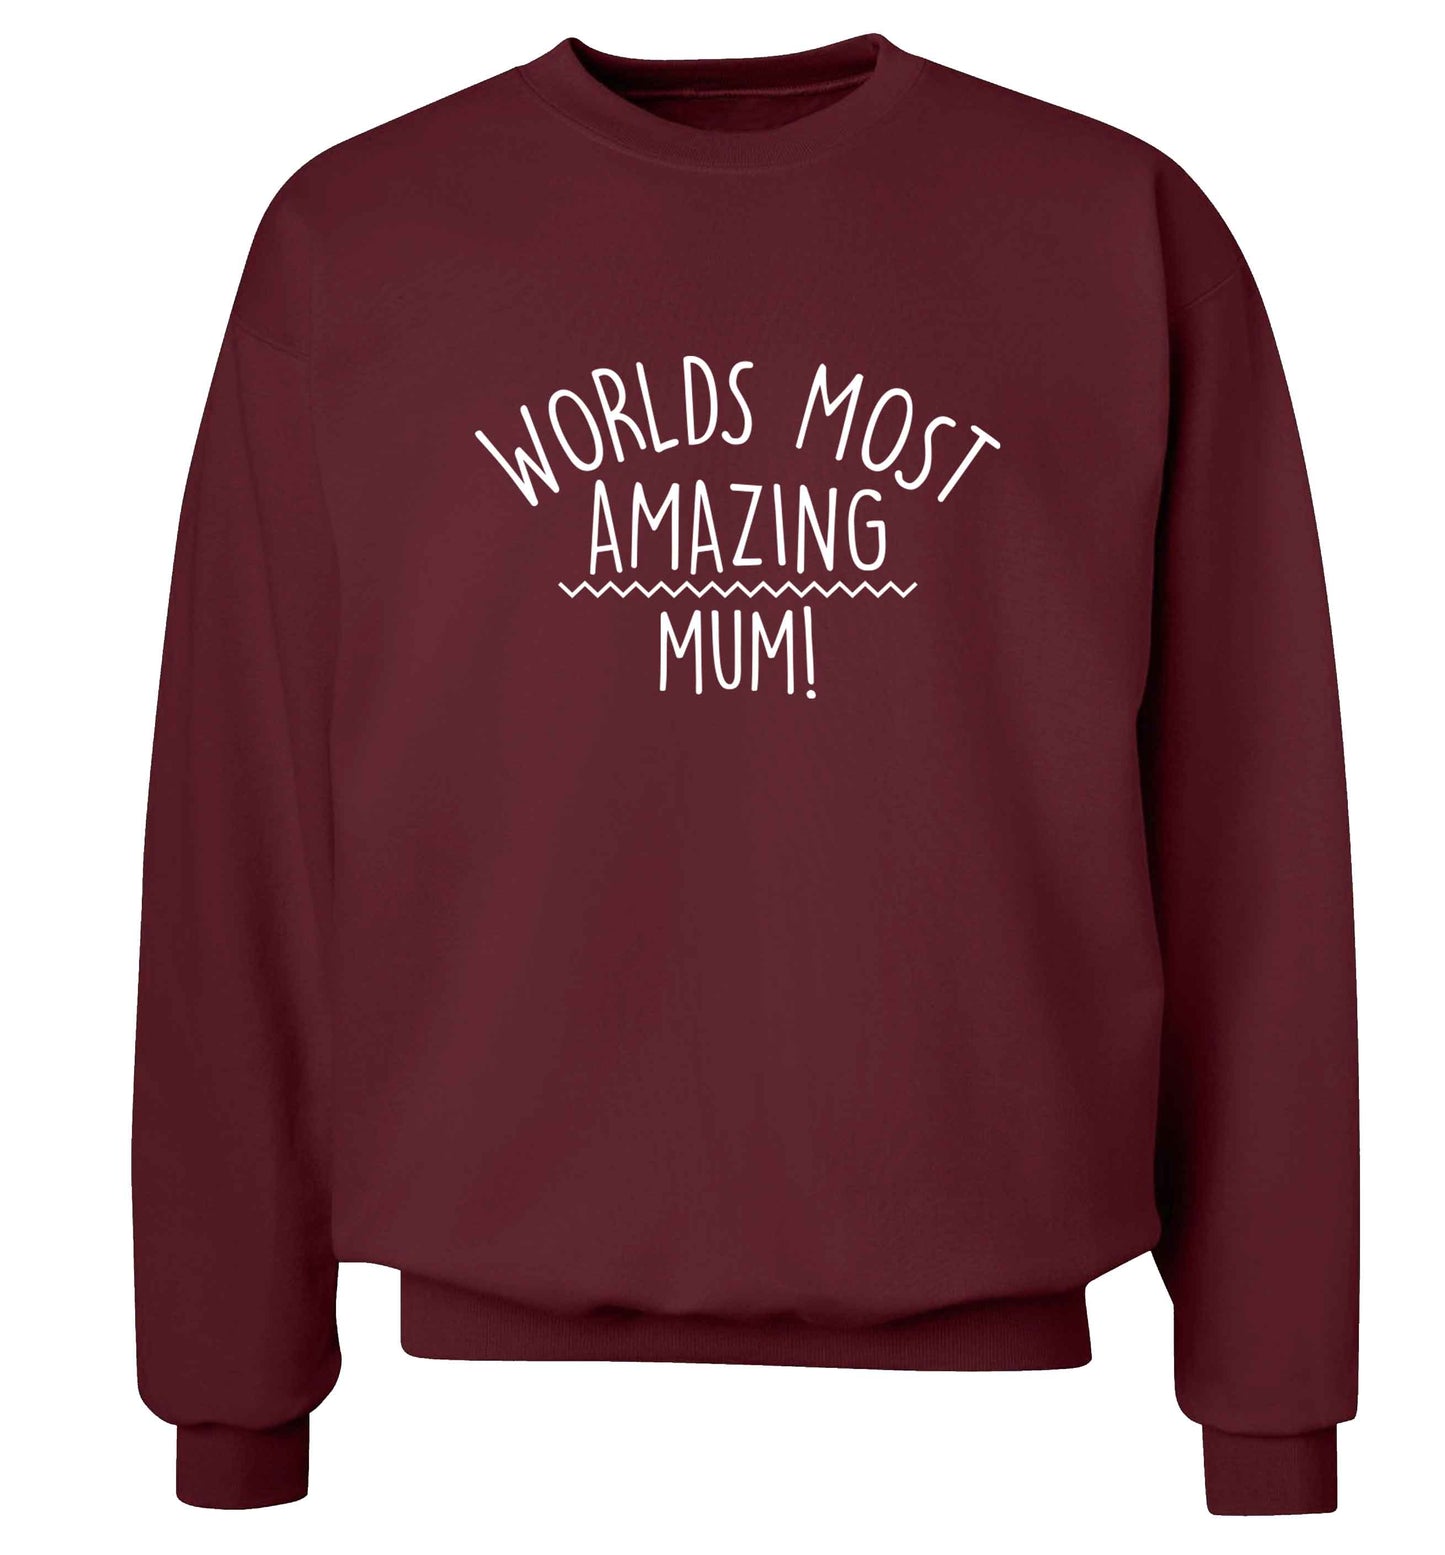 Worlds most amazing mum adult's unisex maroon sweater 2XL